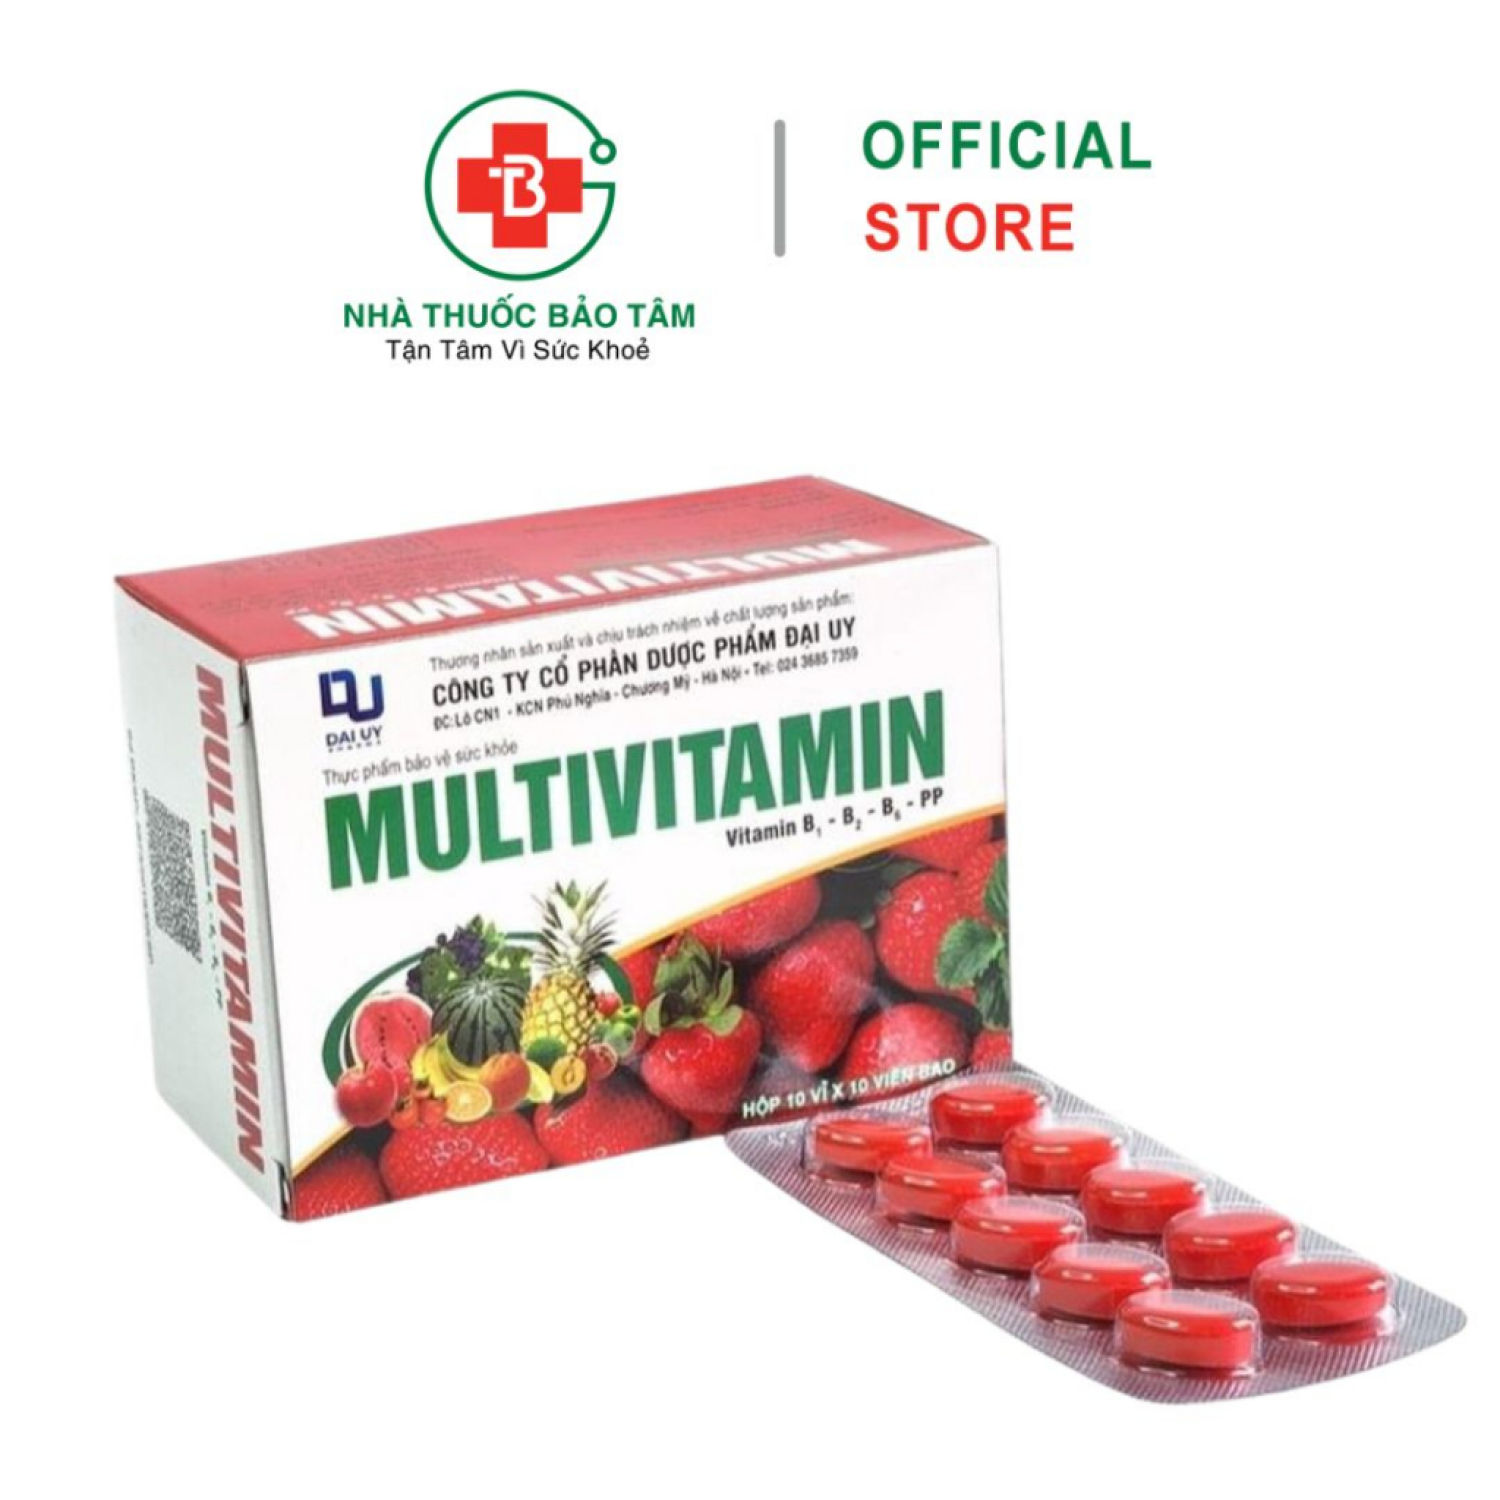 Vitamin tổng hợp Multivitamin DAIUY bổ sung vitamin